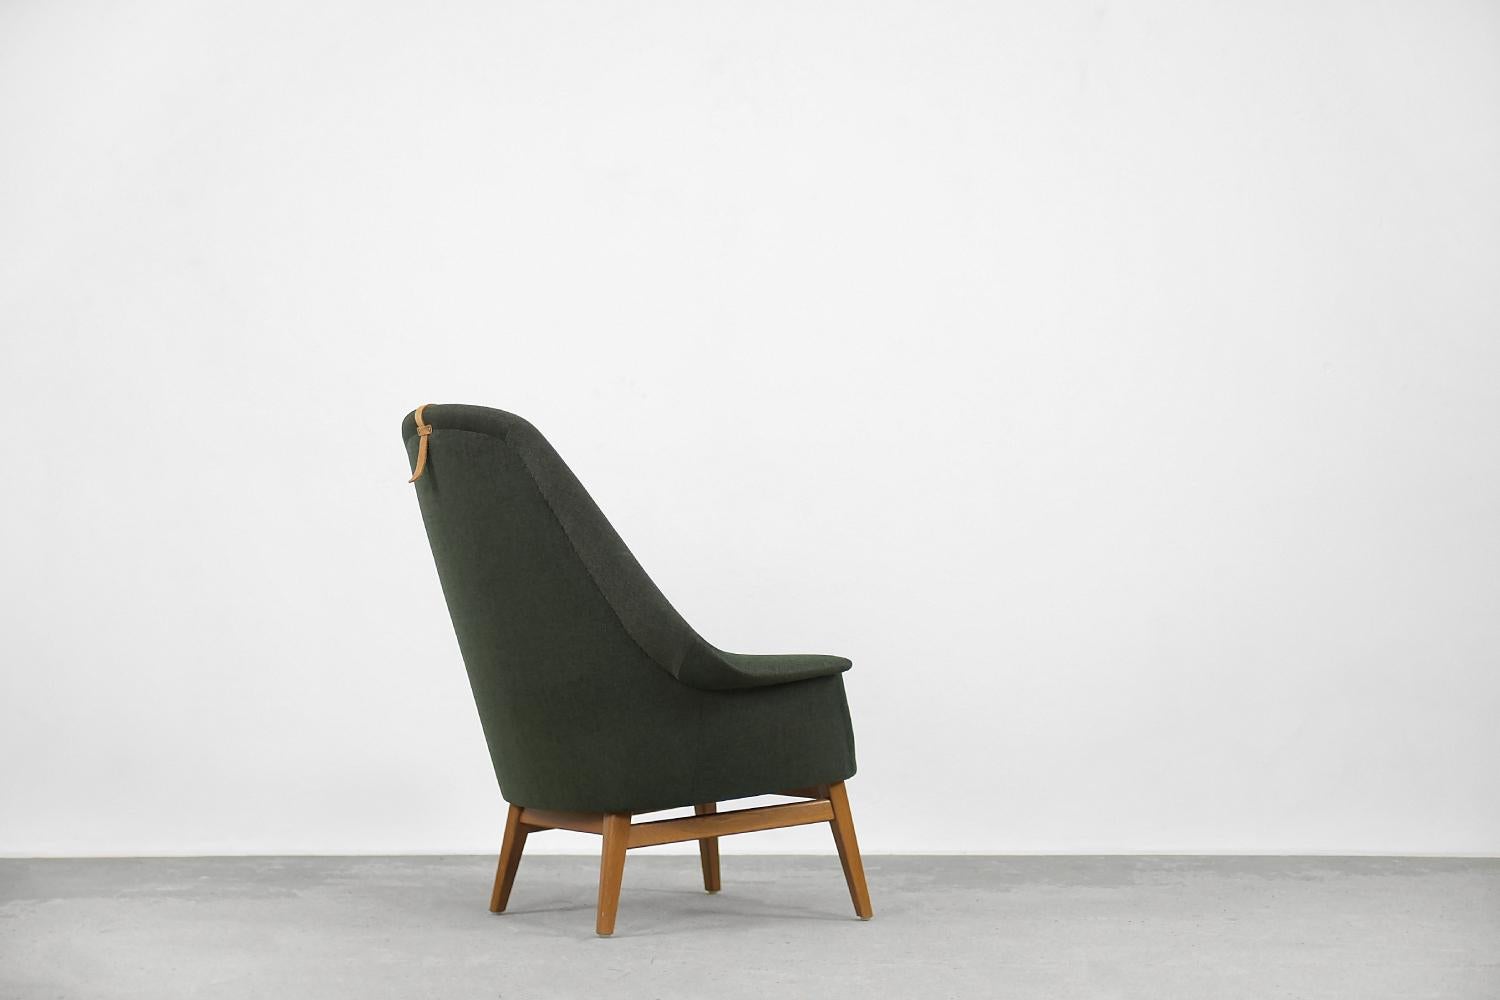 Vintage Scandinavian Modern Armchair in Green fabric and Beech wood legs, 1950s. 1